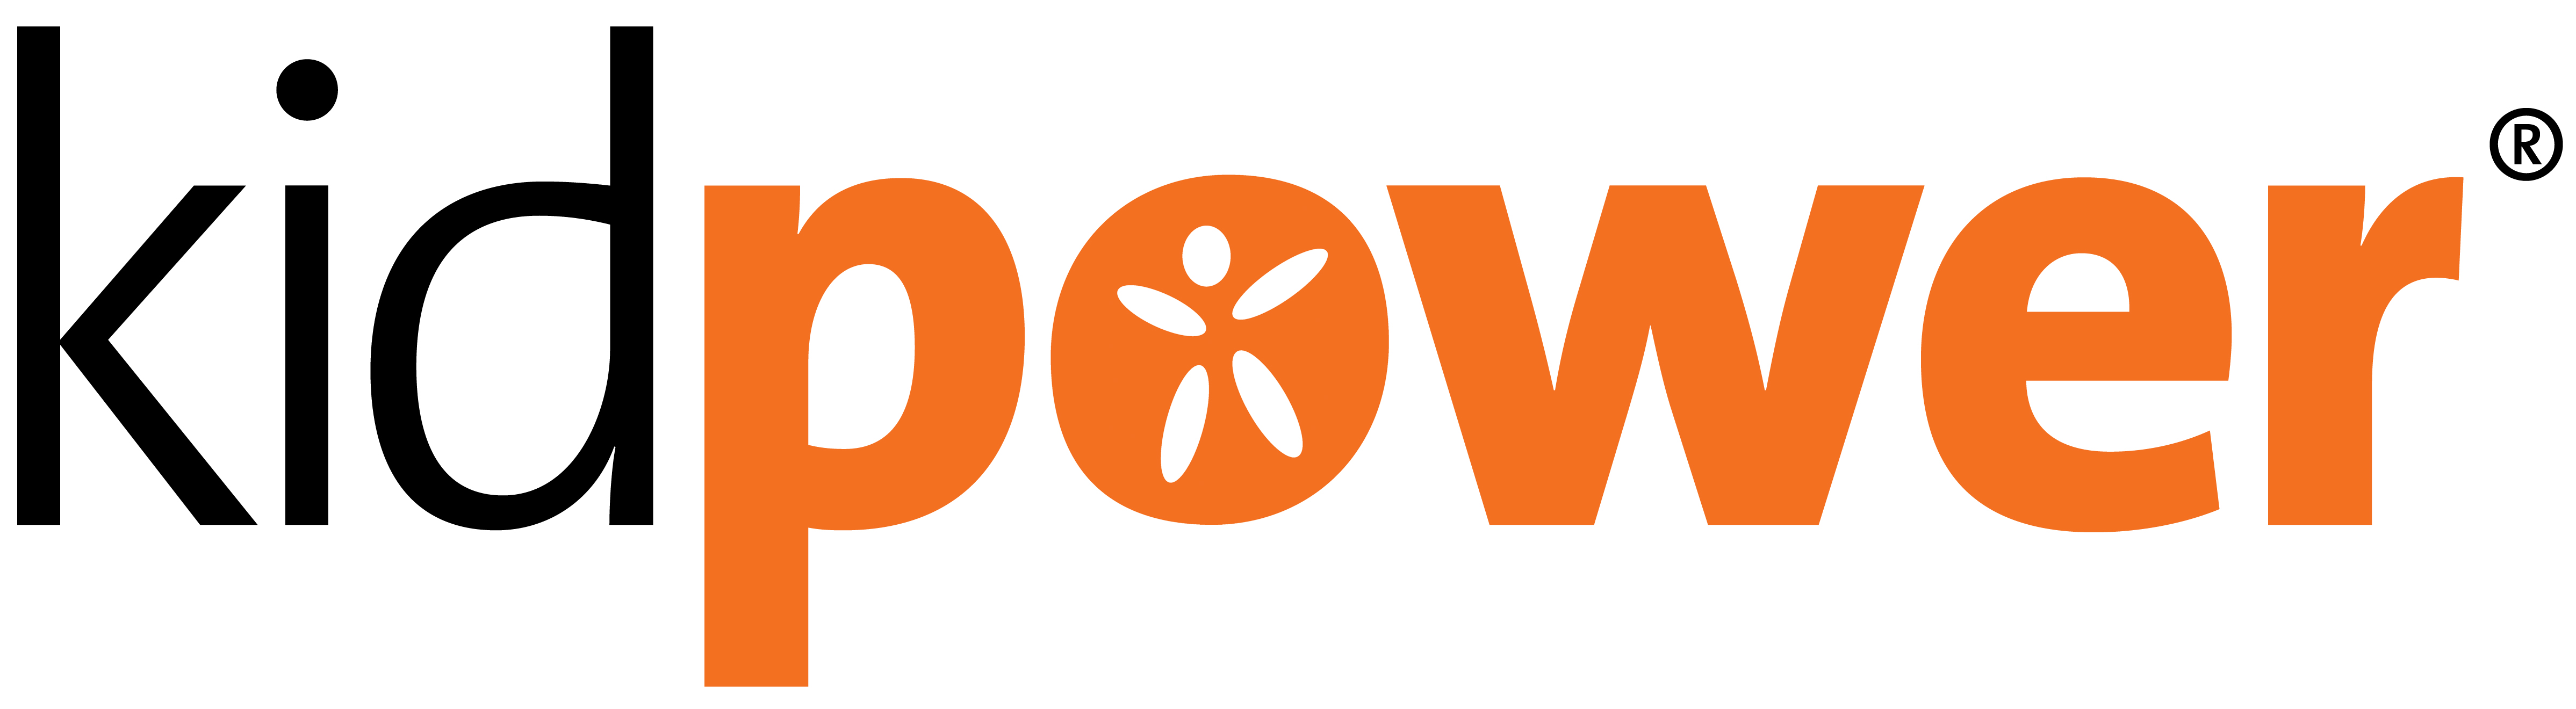 Kidpower Teenpower Fullpower International logo